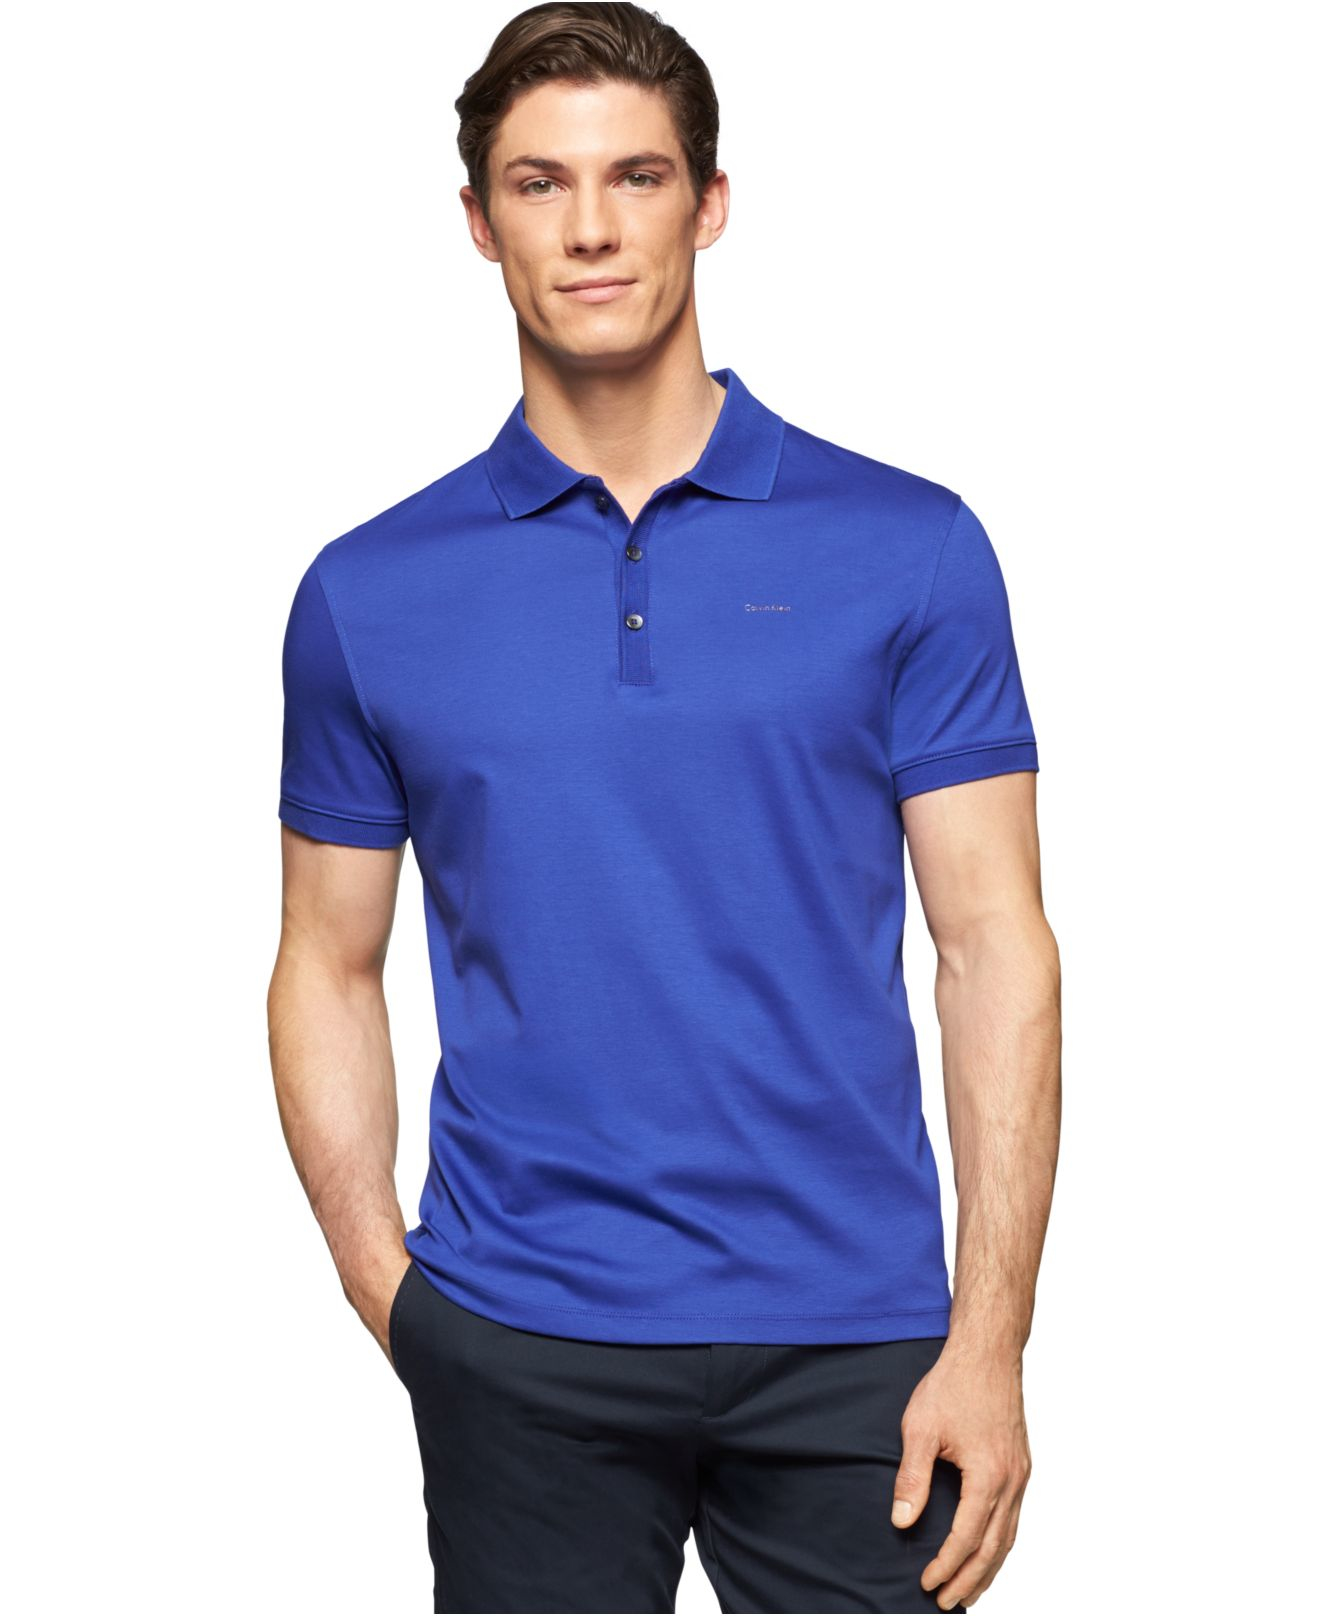 Calvin Klein Liquid Cotton Polo in Blue for Men - Lyst